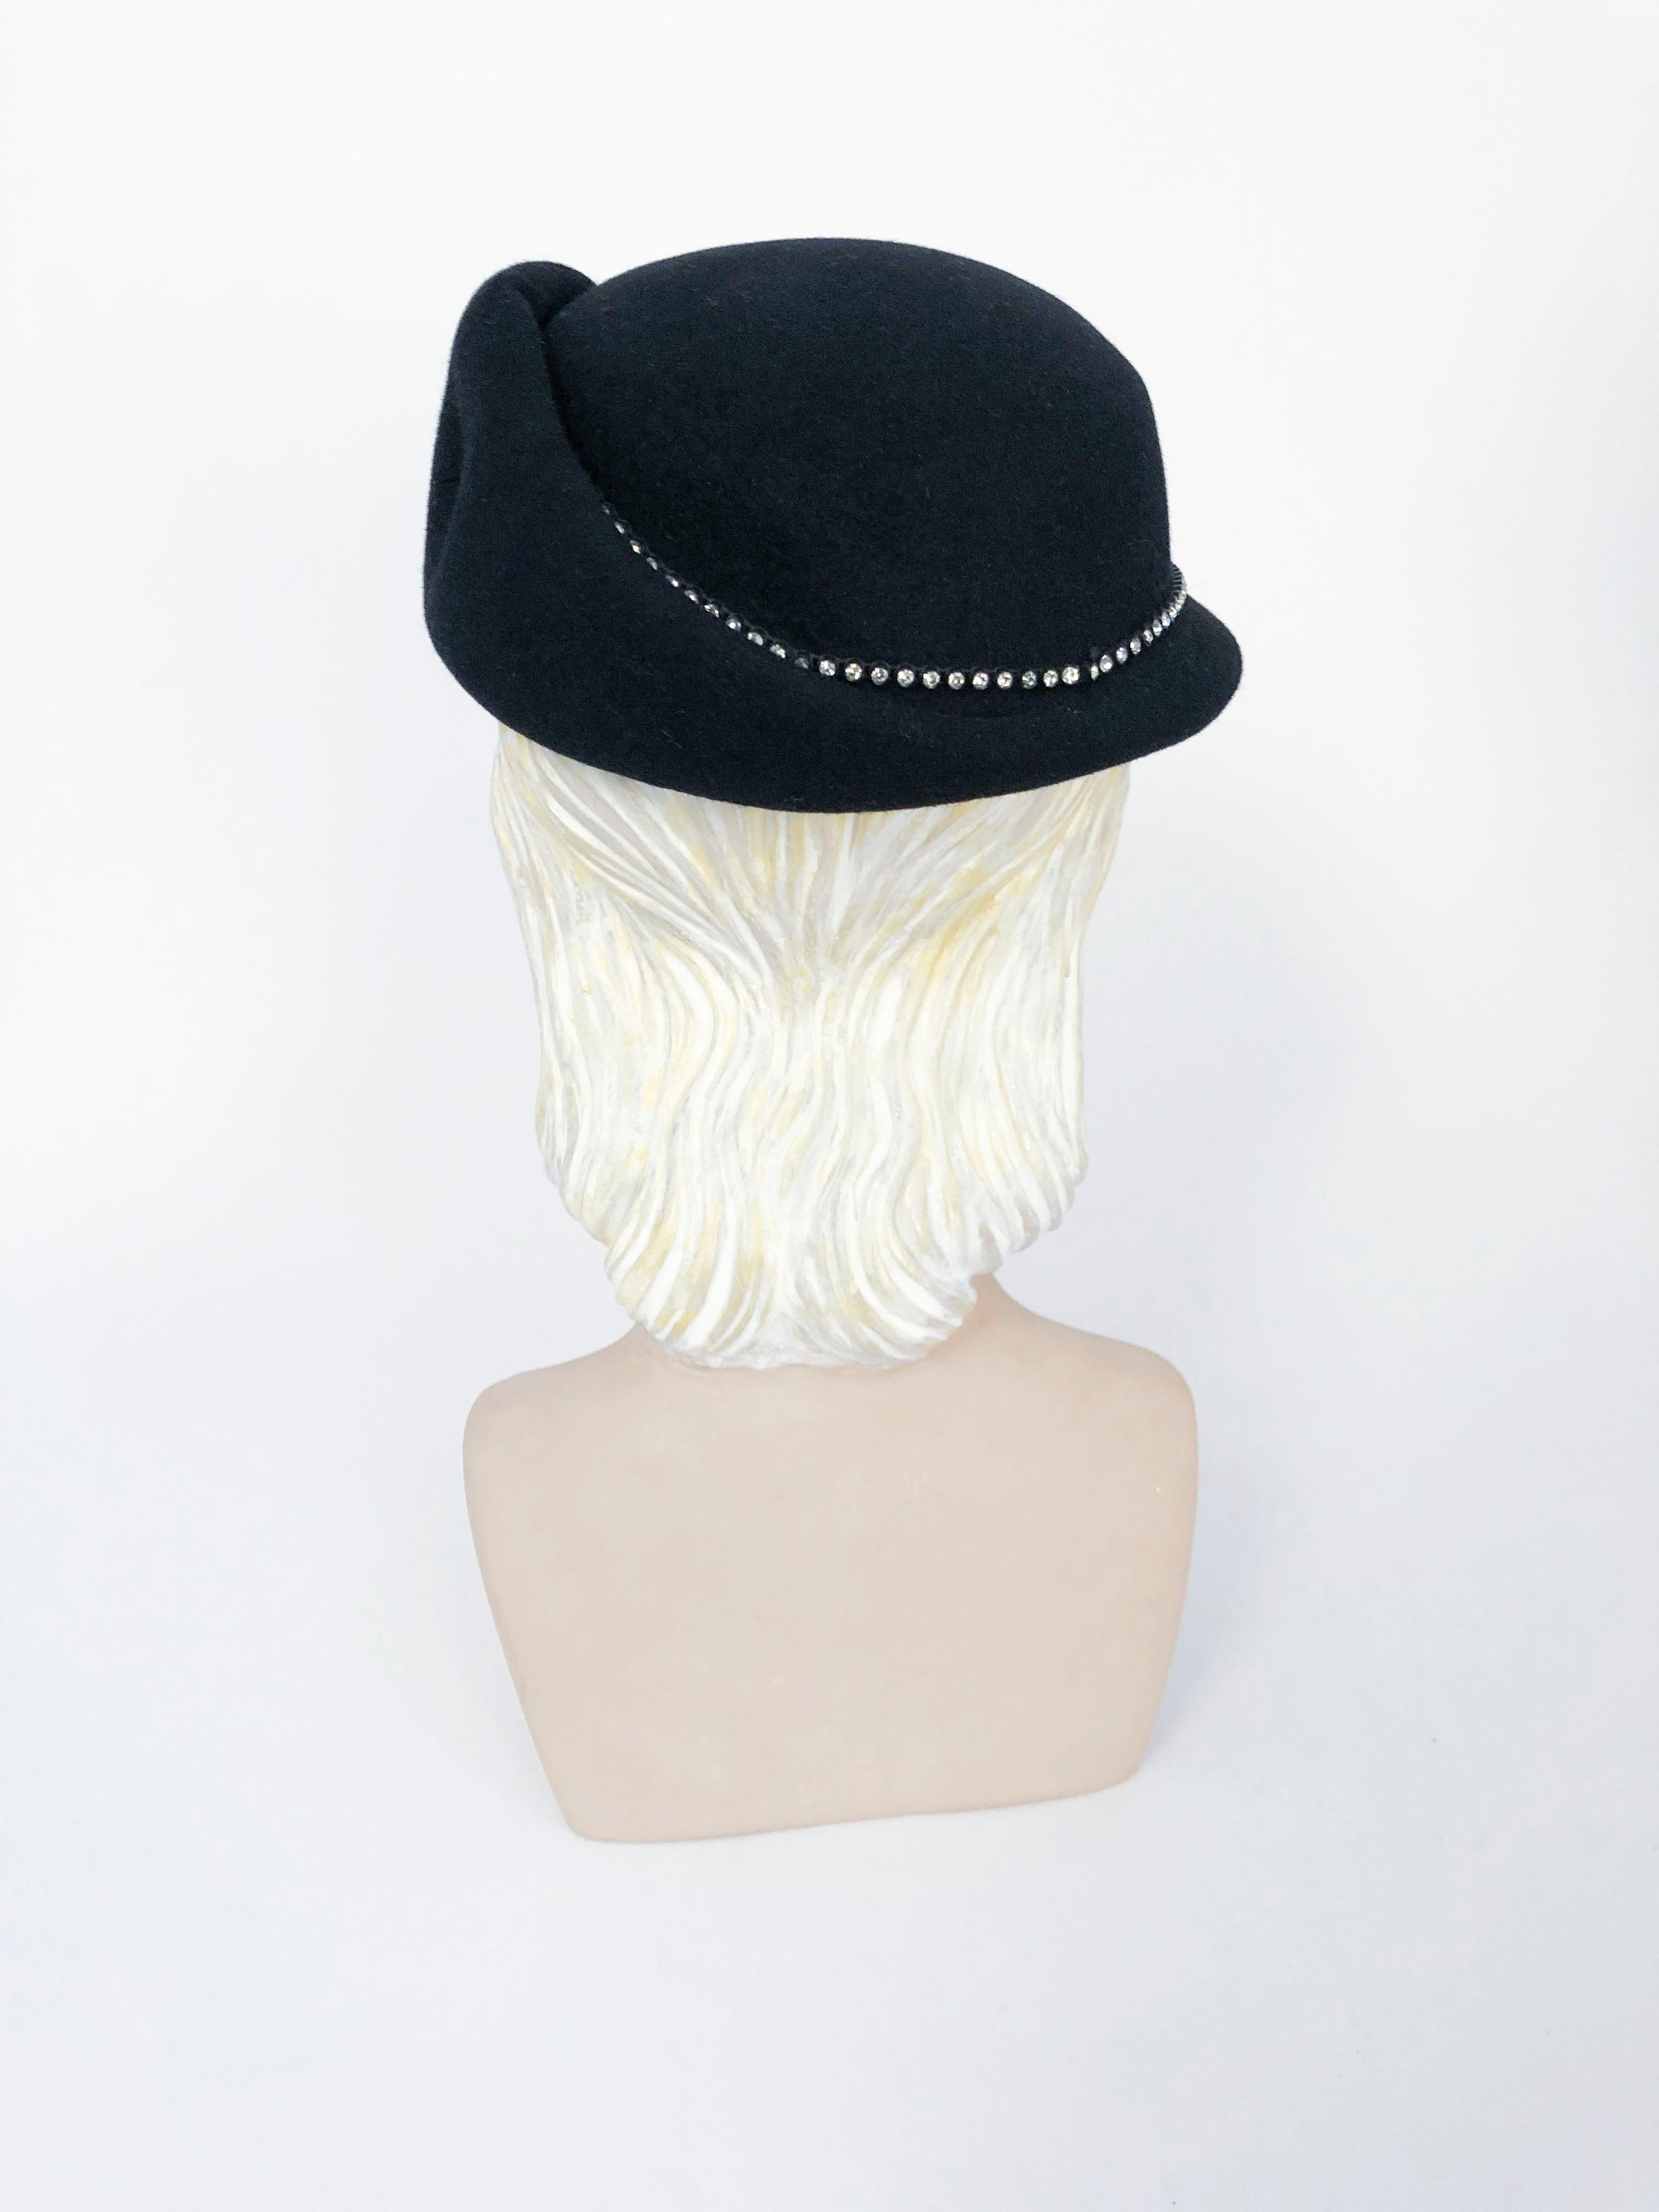 Women's 1960s/1970s Black Fur Felt Hat with Rhinestone Accents